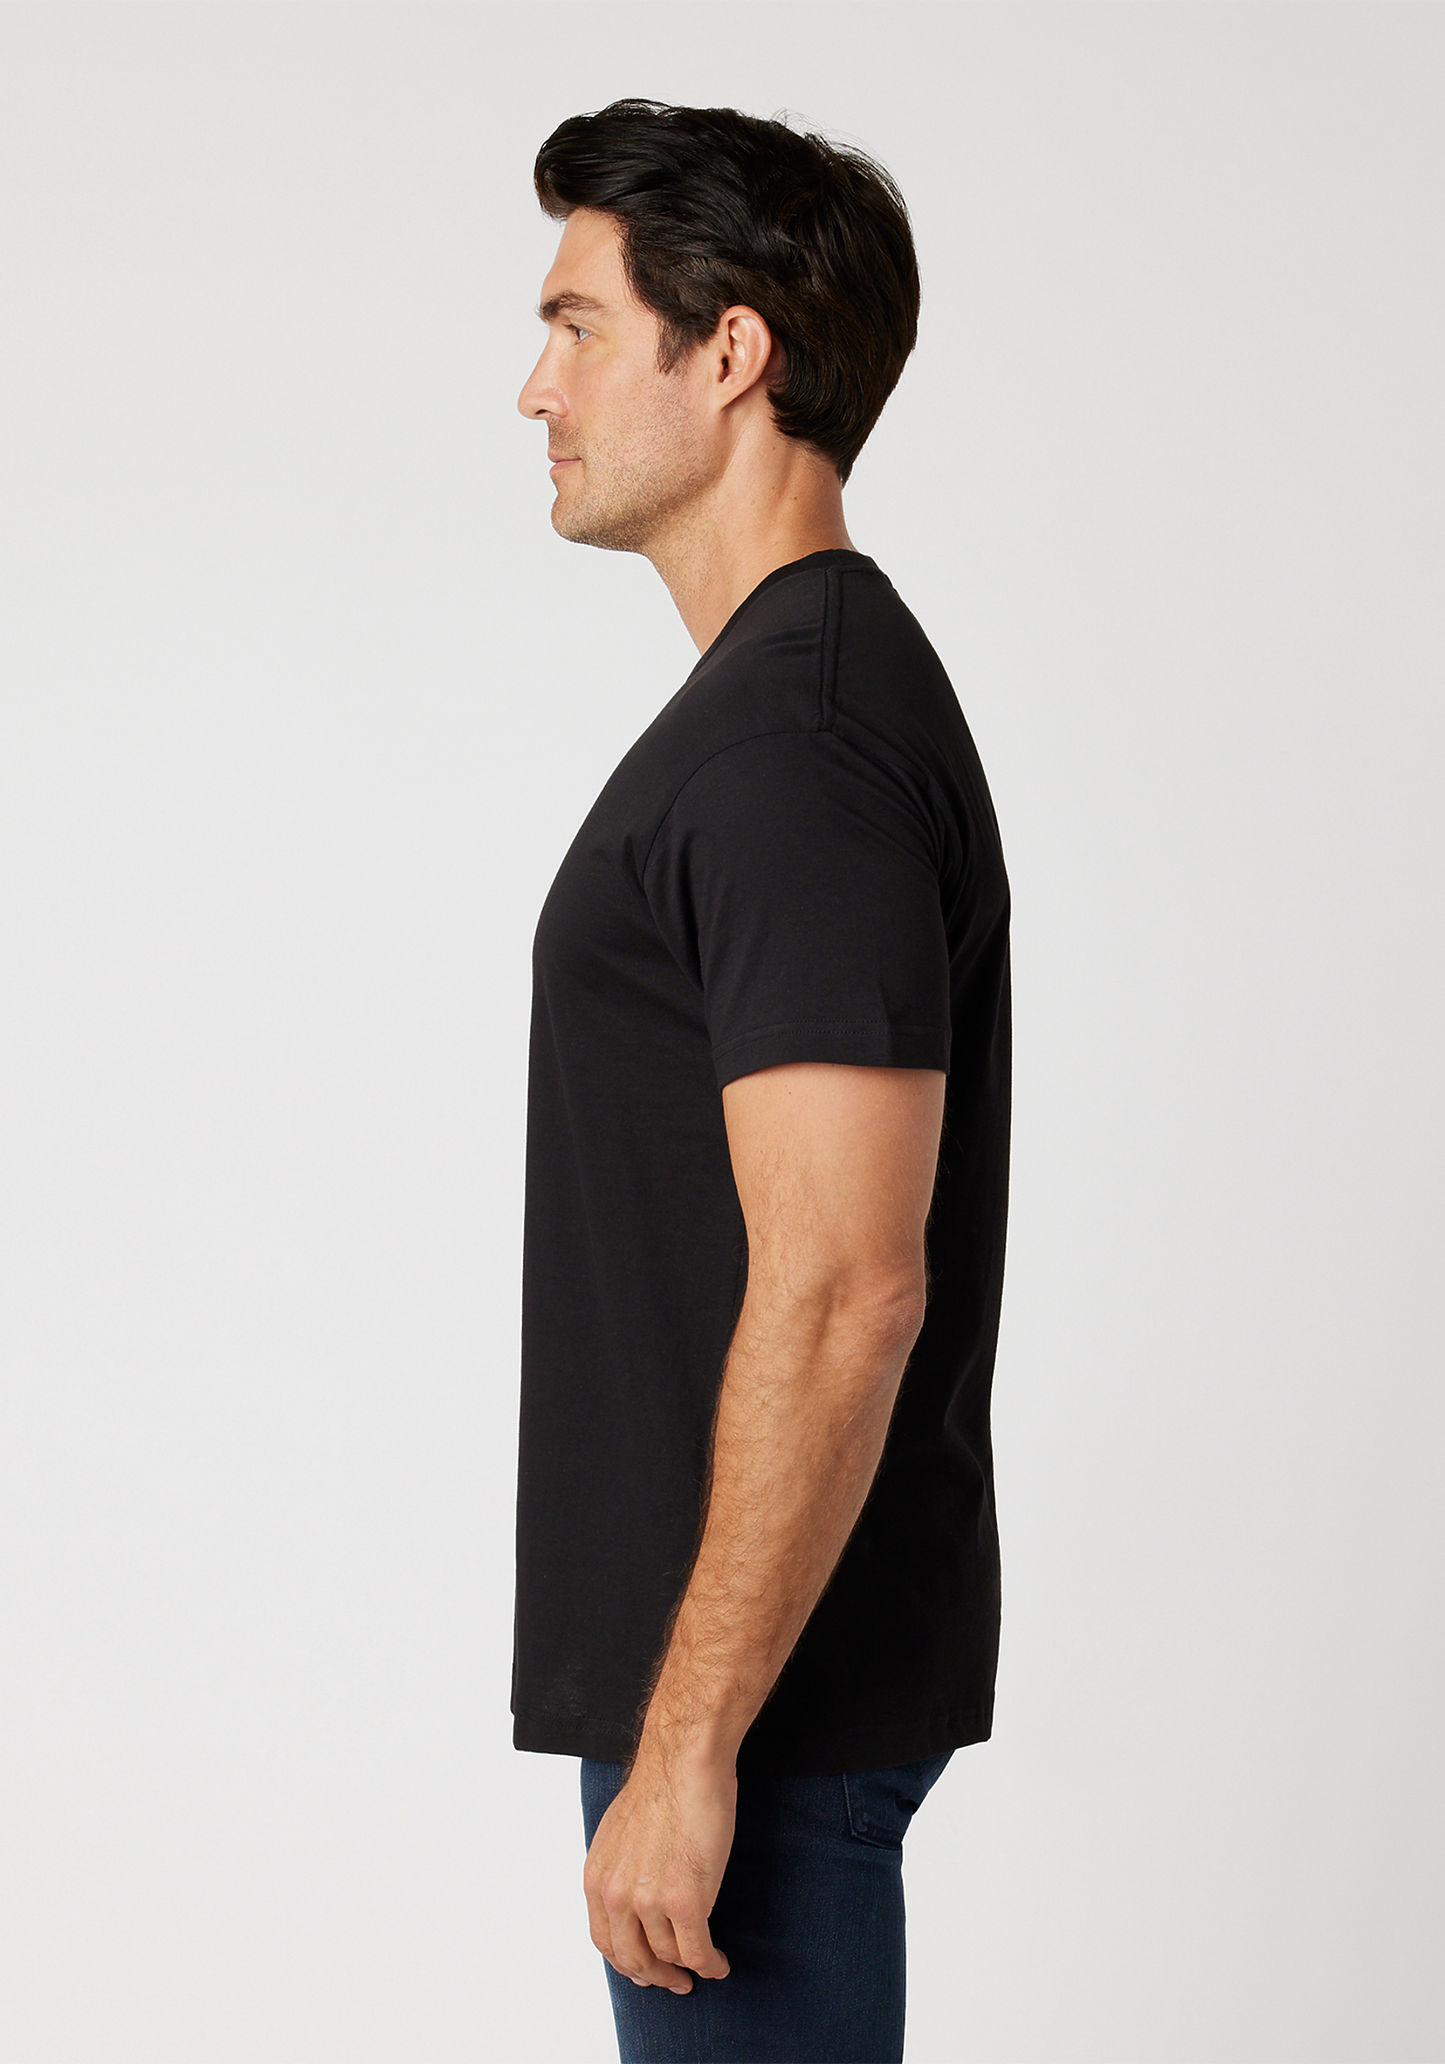 Palaboy Unisex T-Shirt (Black)